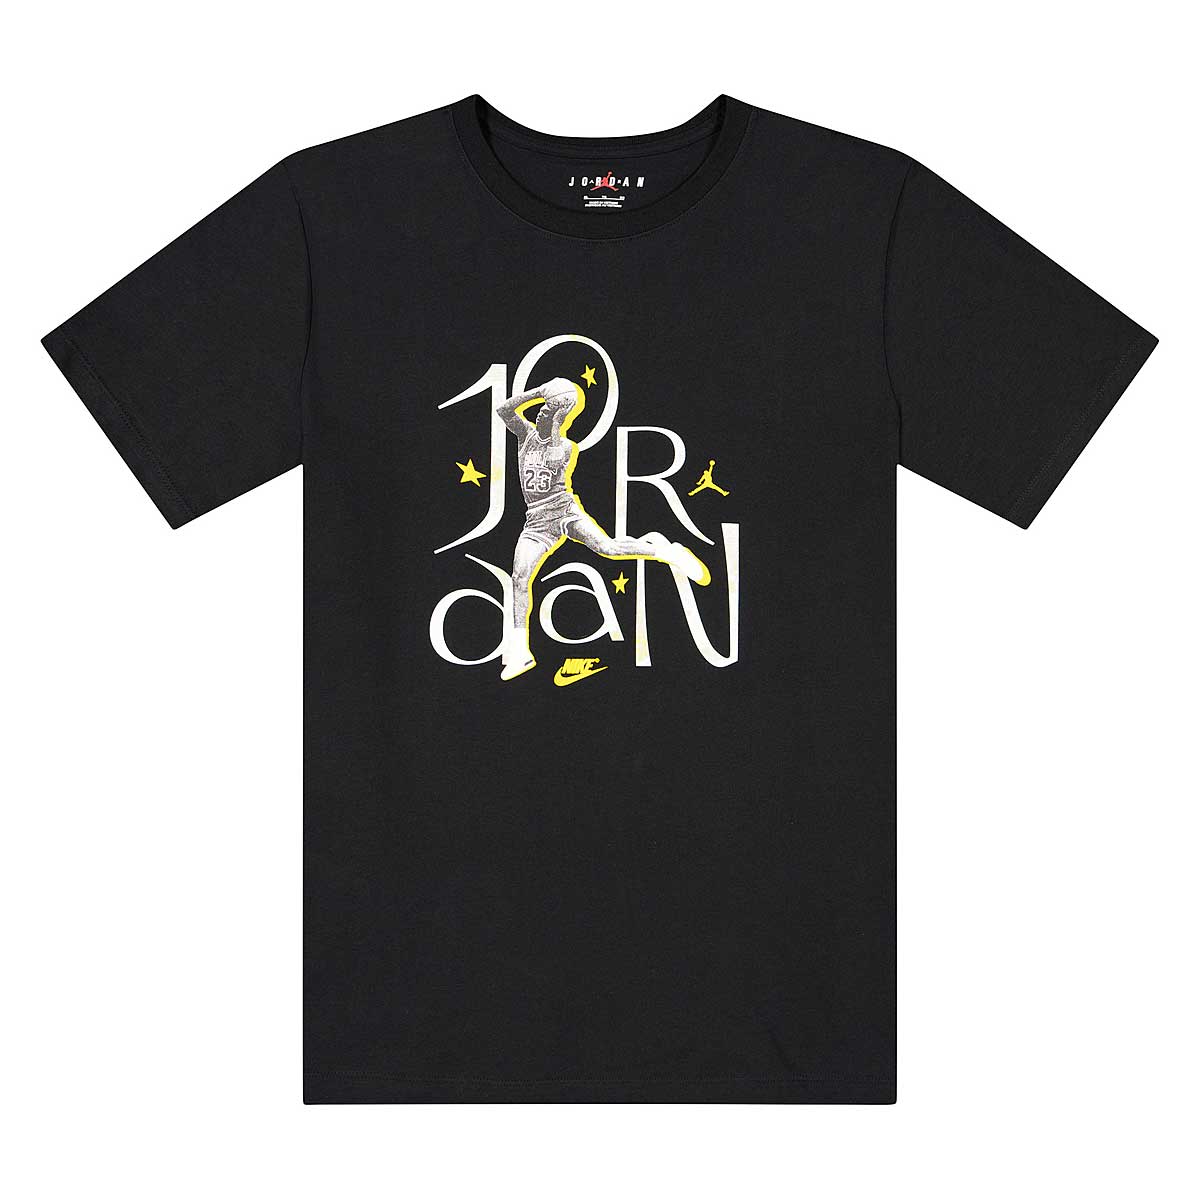 Jordan Sports Dna Graphic T-Shirt, Black